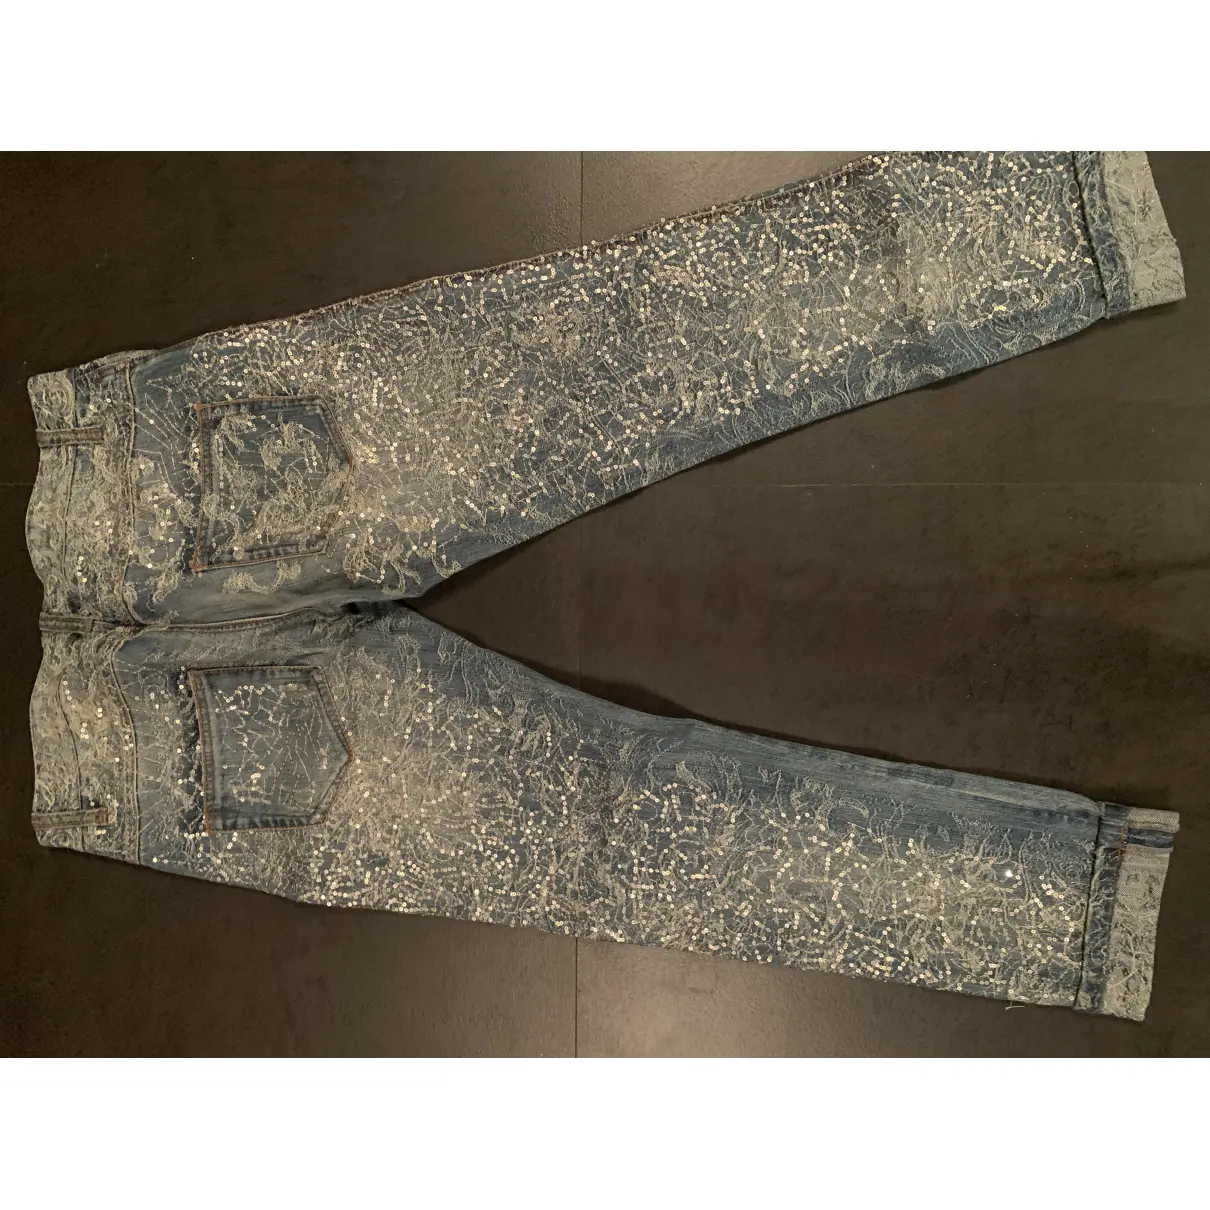 Buy Ermanno Scervino Slim jeans online